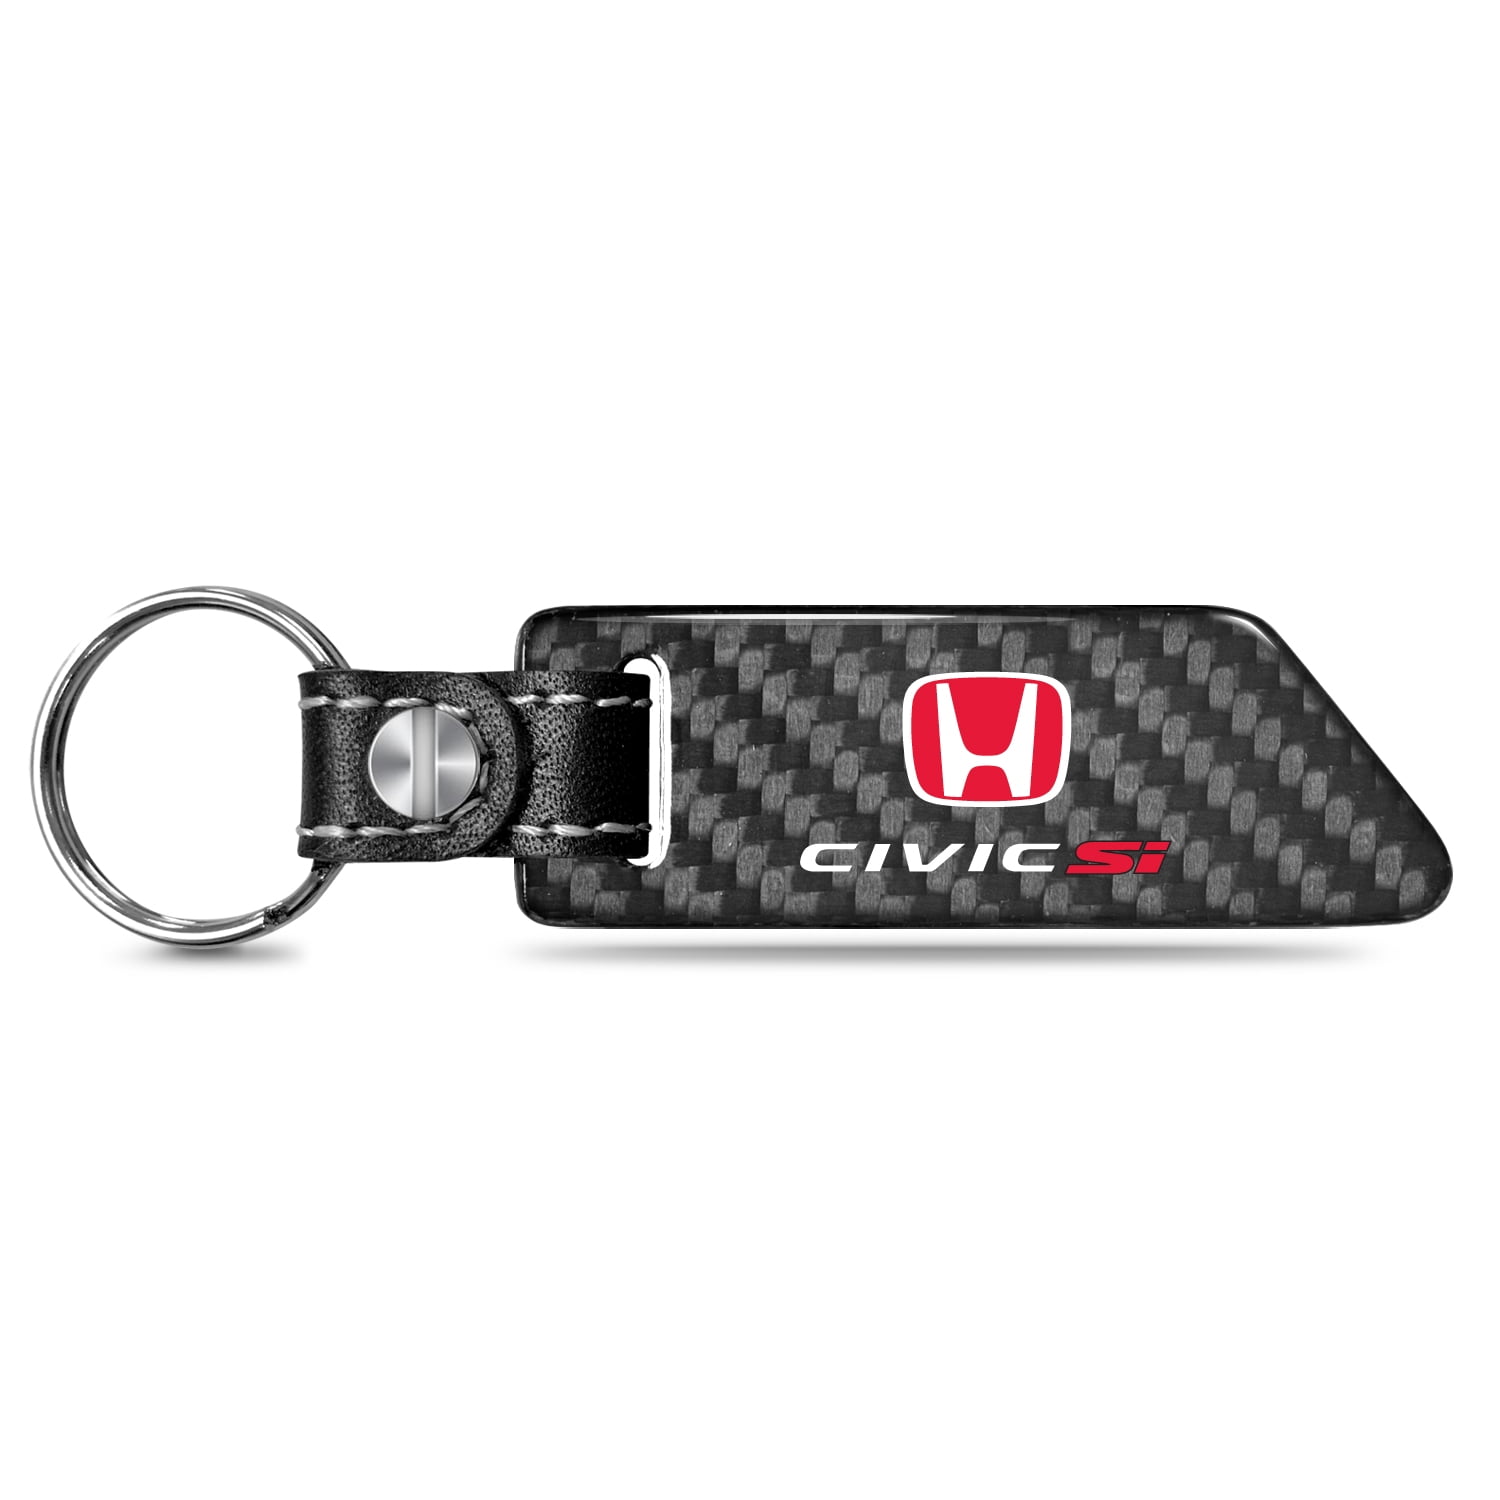 Honda Civic Si Black Nylon Lanyard with Red H Logo Charm Key Chain Key-ring 